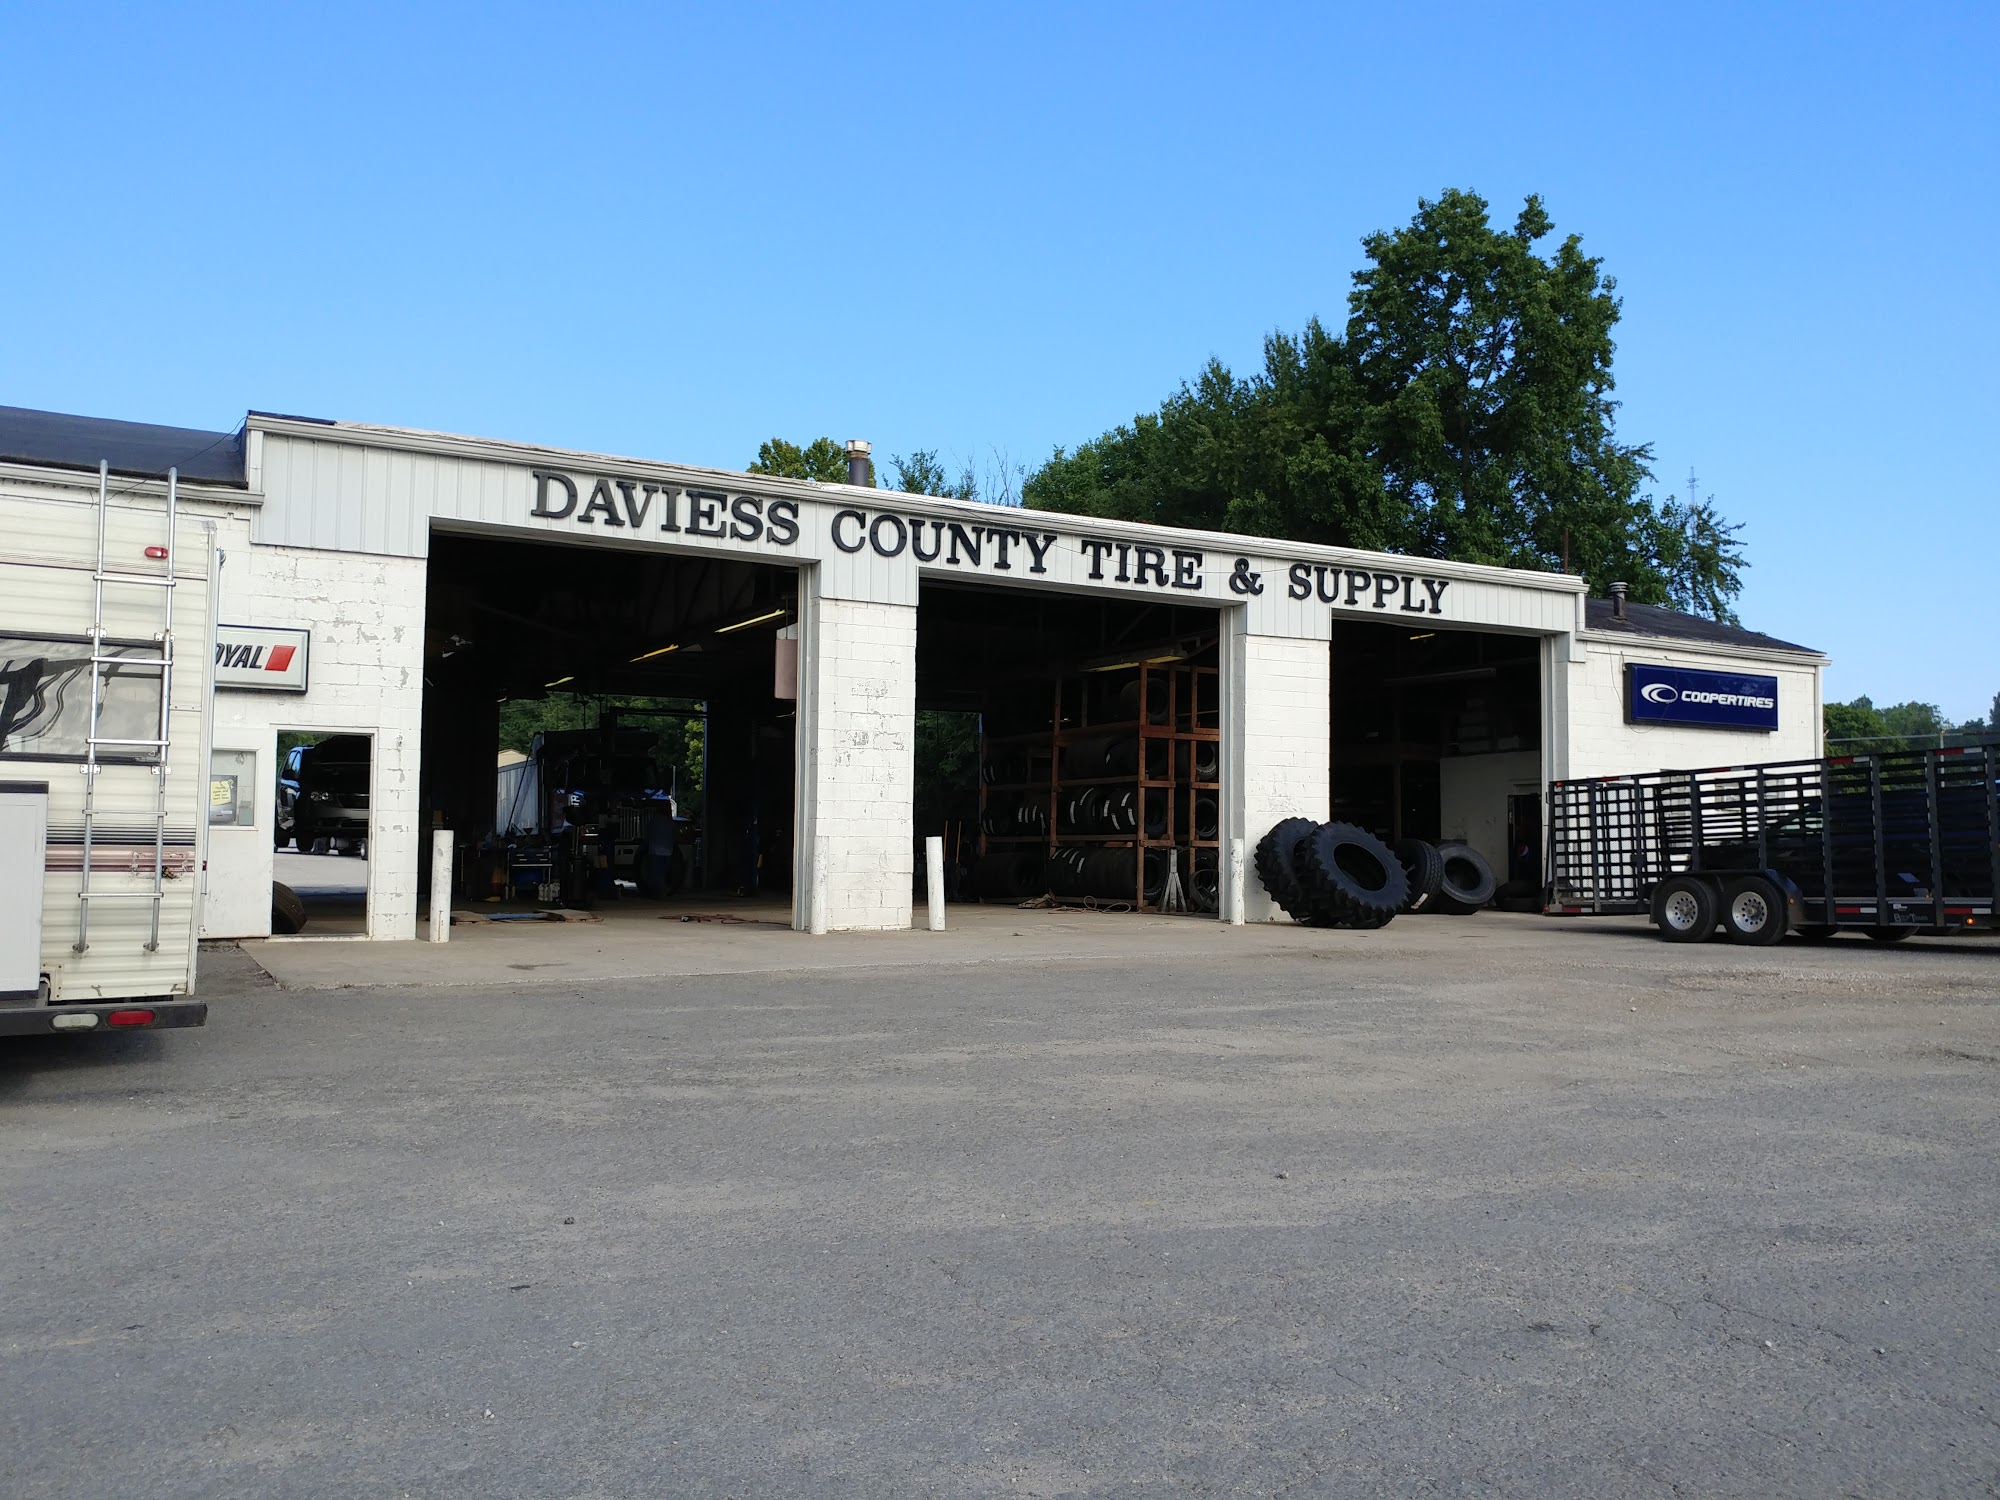 Daviess County Tire & Supply